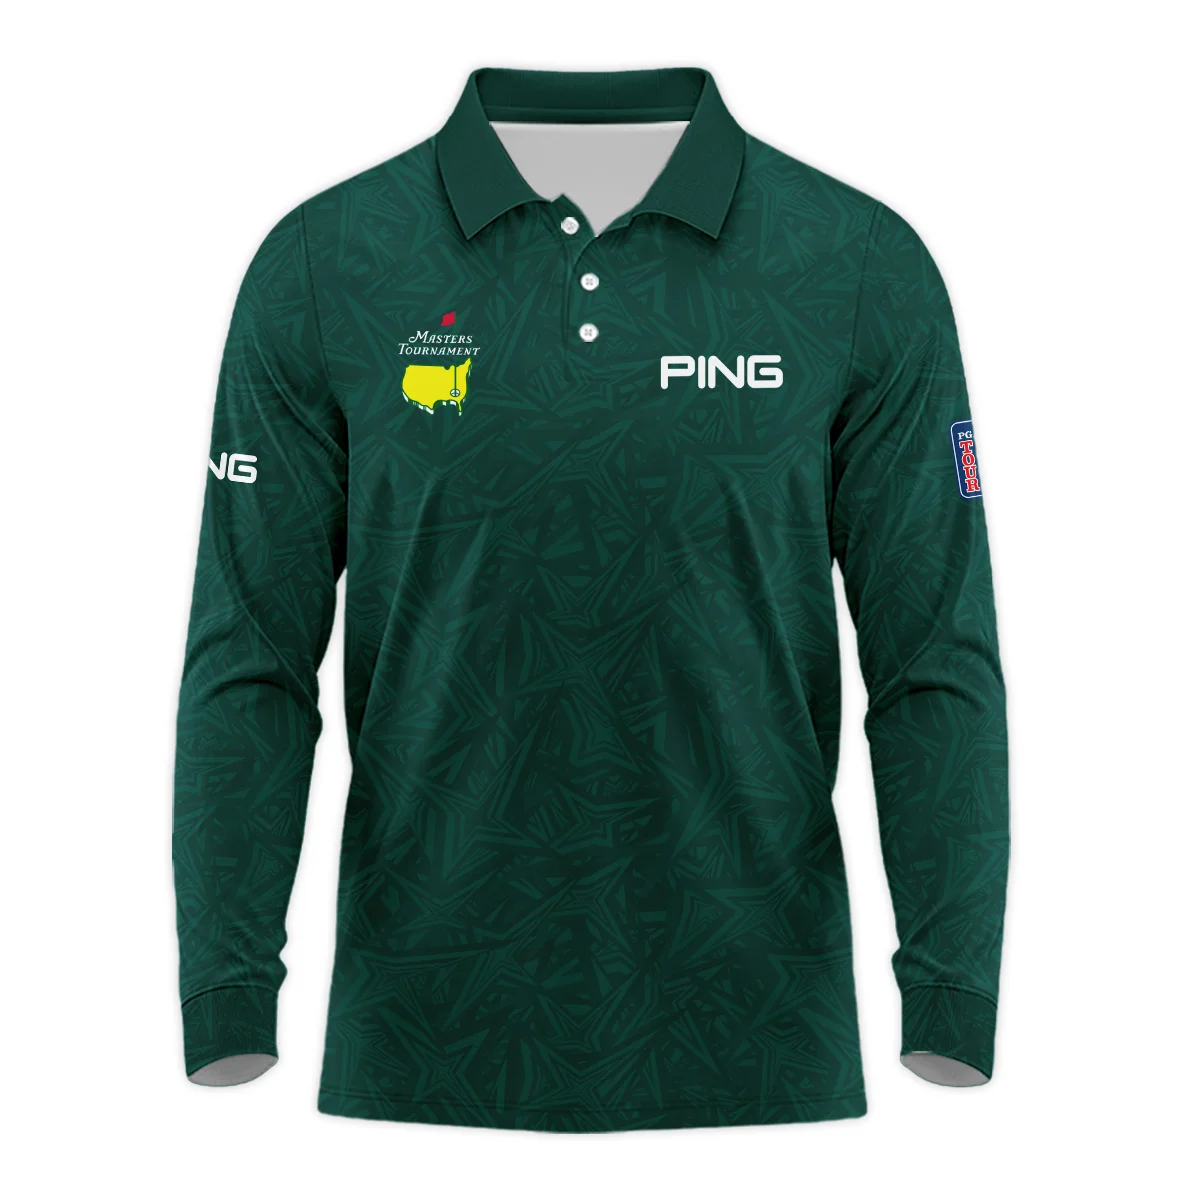 Stars Dark Green Abstract Sport Masters Tournament Ping Unisex Sweatshirt Style Classic Sweatshirt